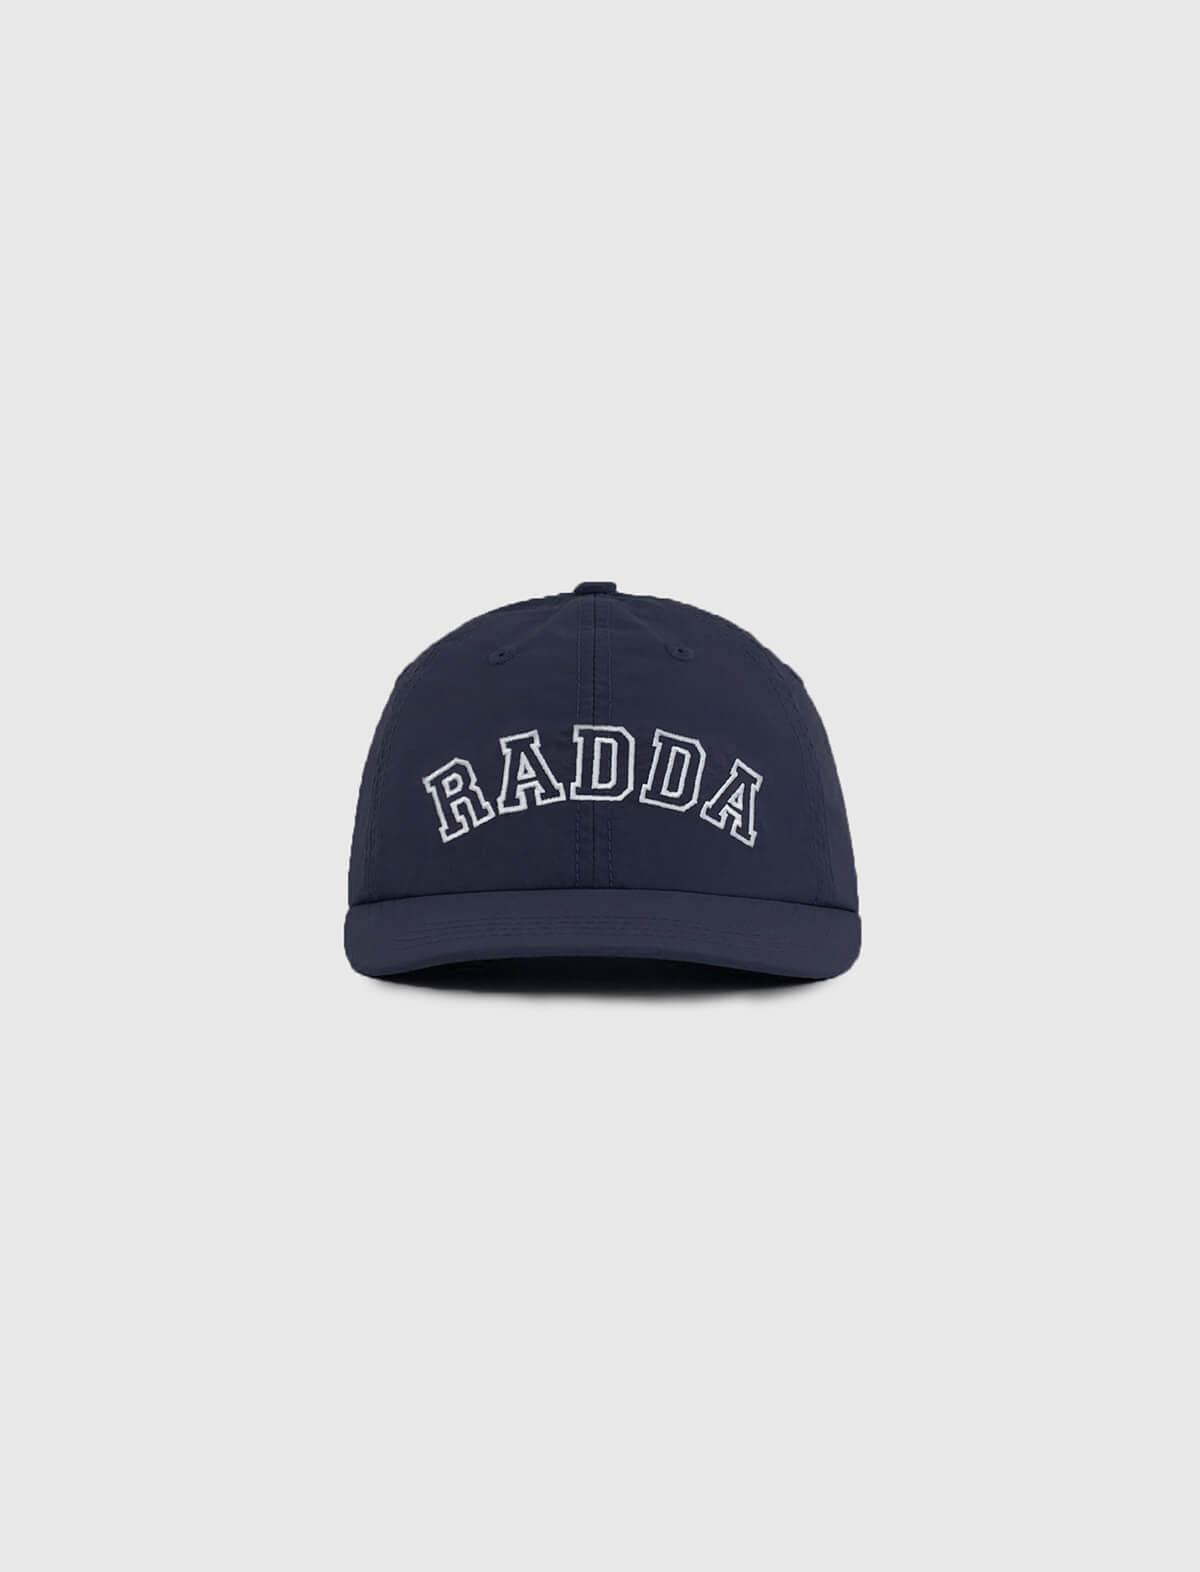 RADDA GOLF Akira Nylon Hat in Midnight